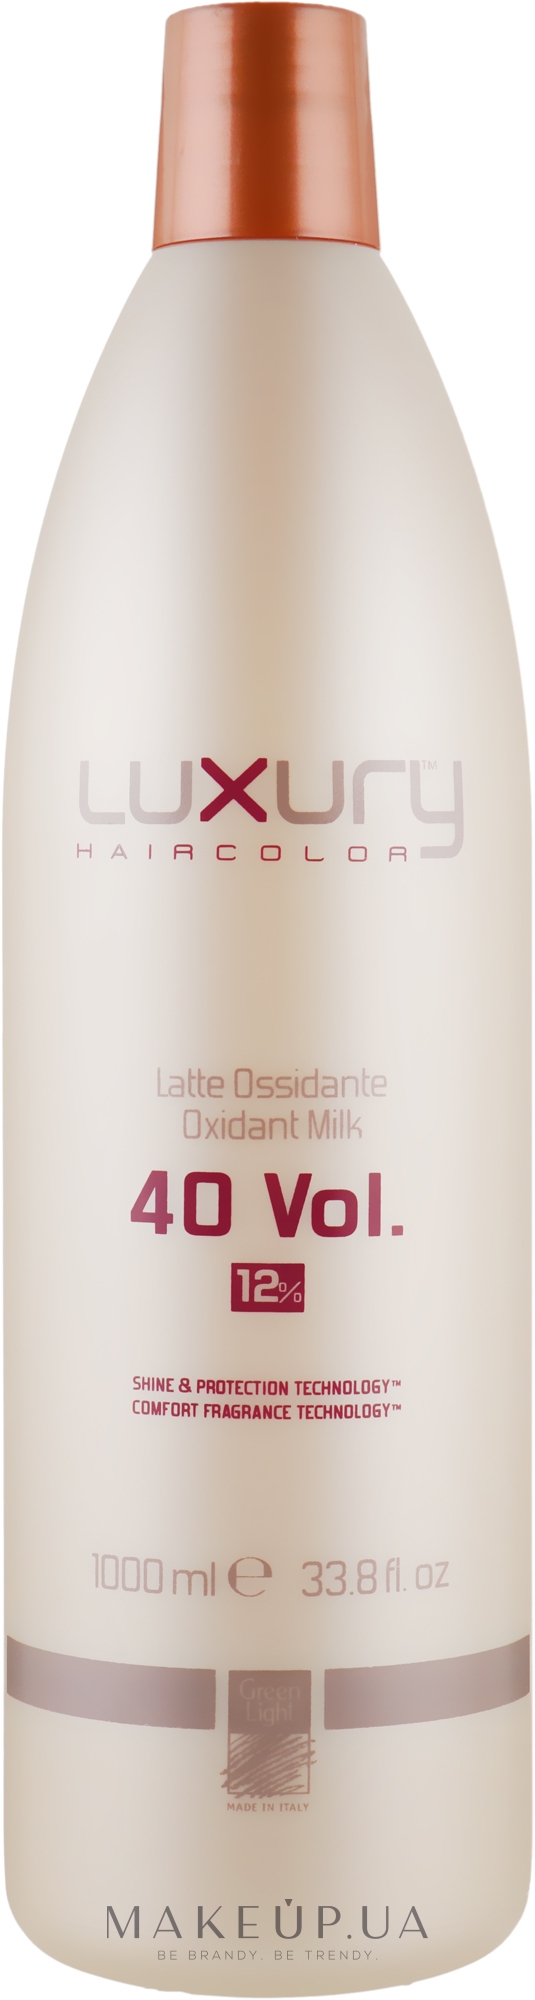 Молочний Оксидант - Green Light Luxury Haircolor Oxidant Milk 12% 40 vol. — фото 1000ml